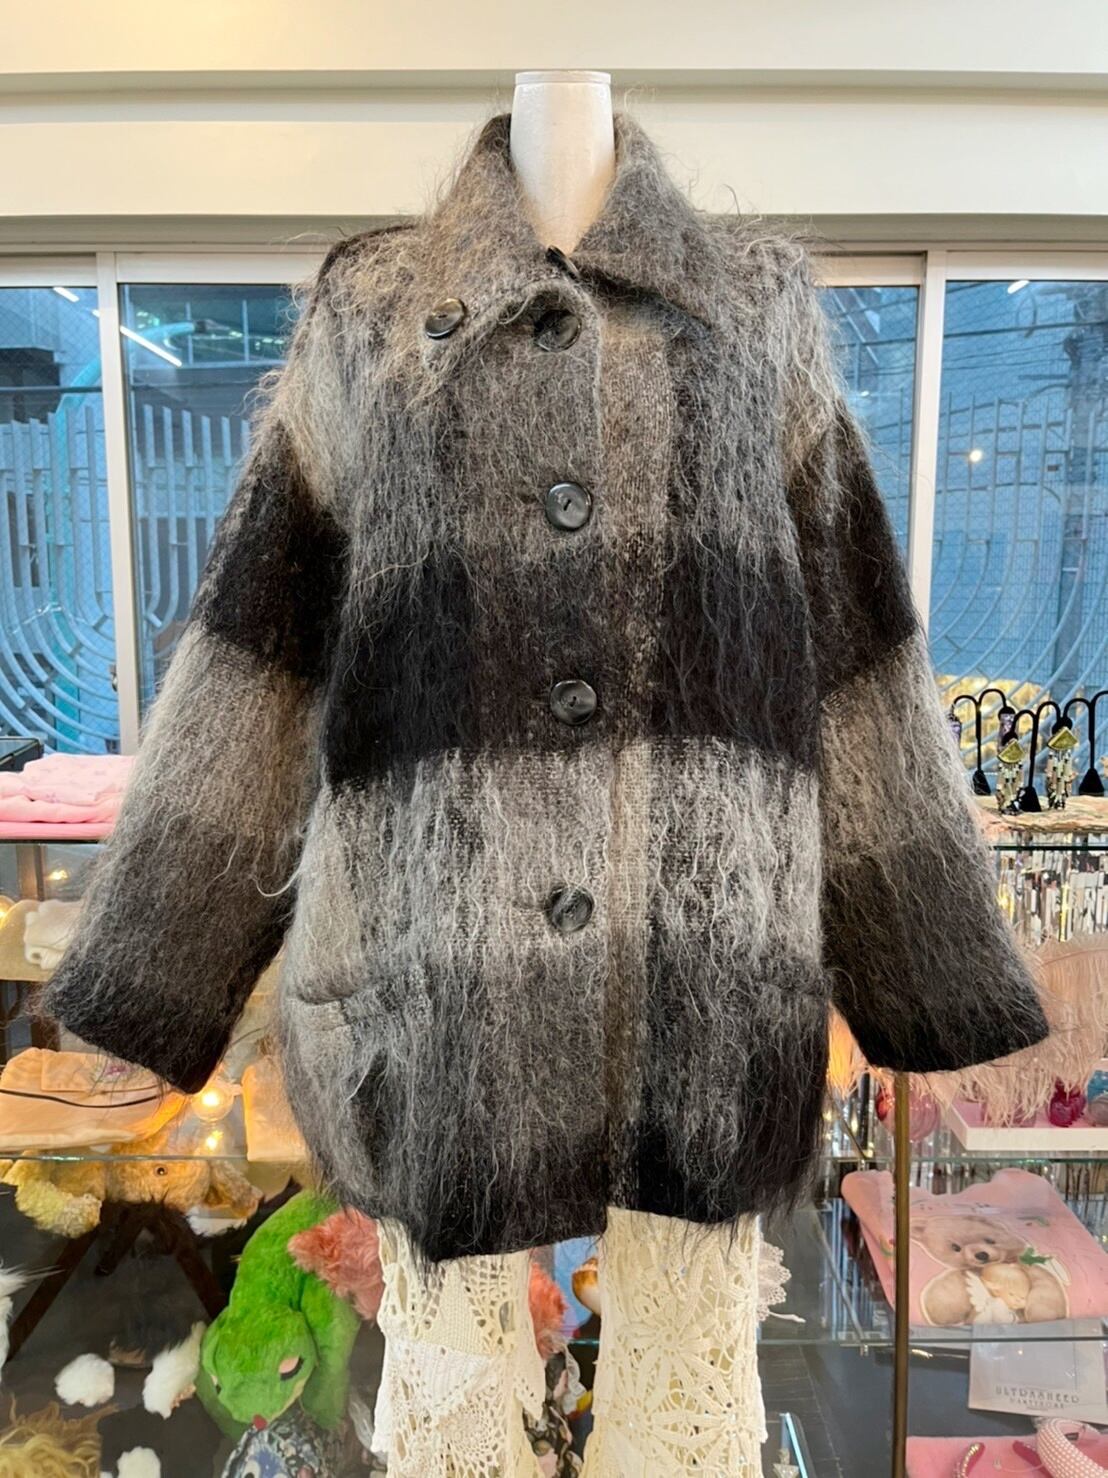 Mohair coat